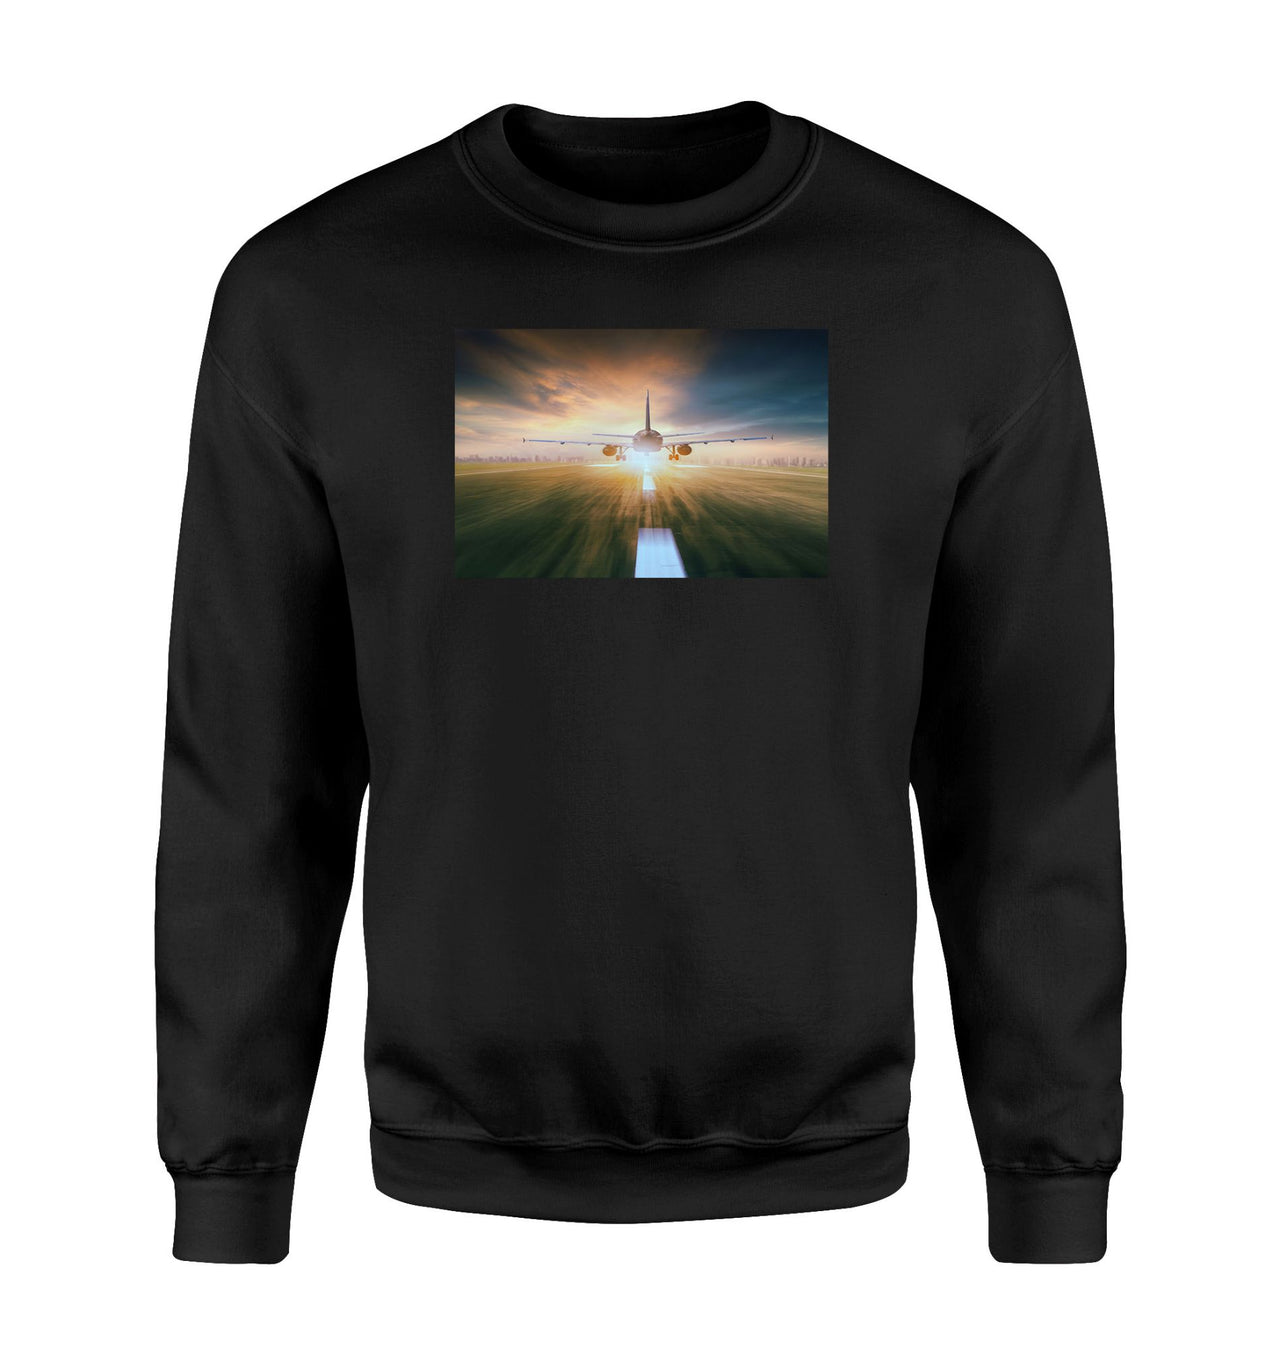 Airplane Flying Over Runway Designed Sweatshirts